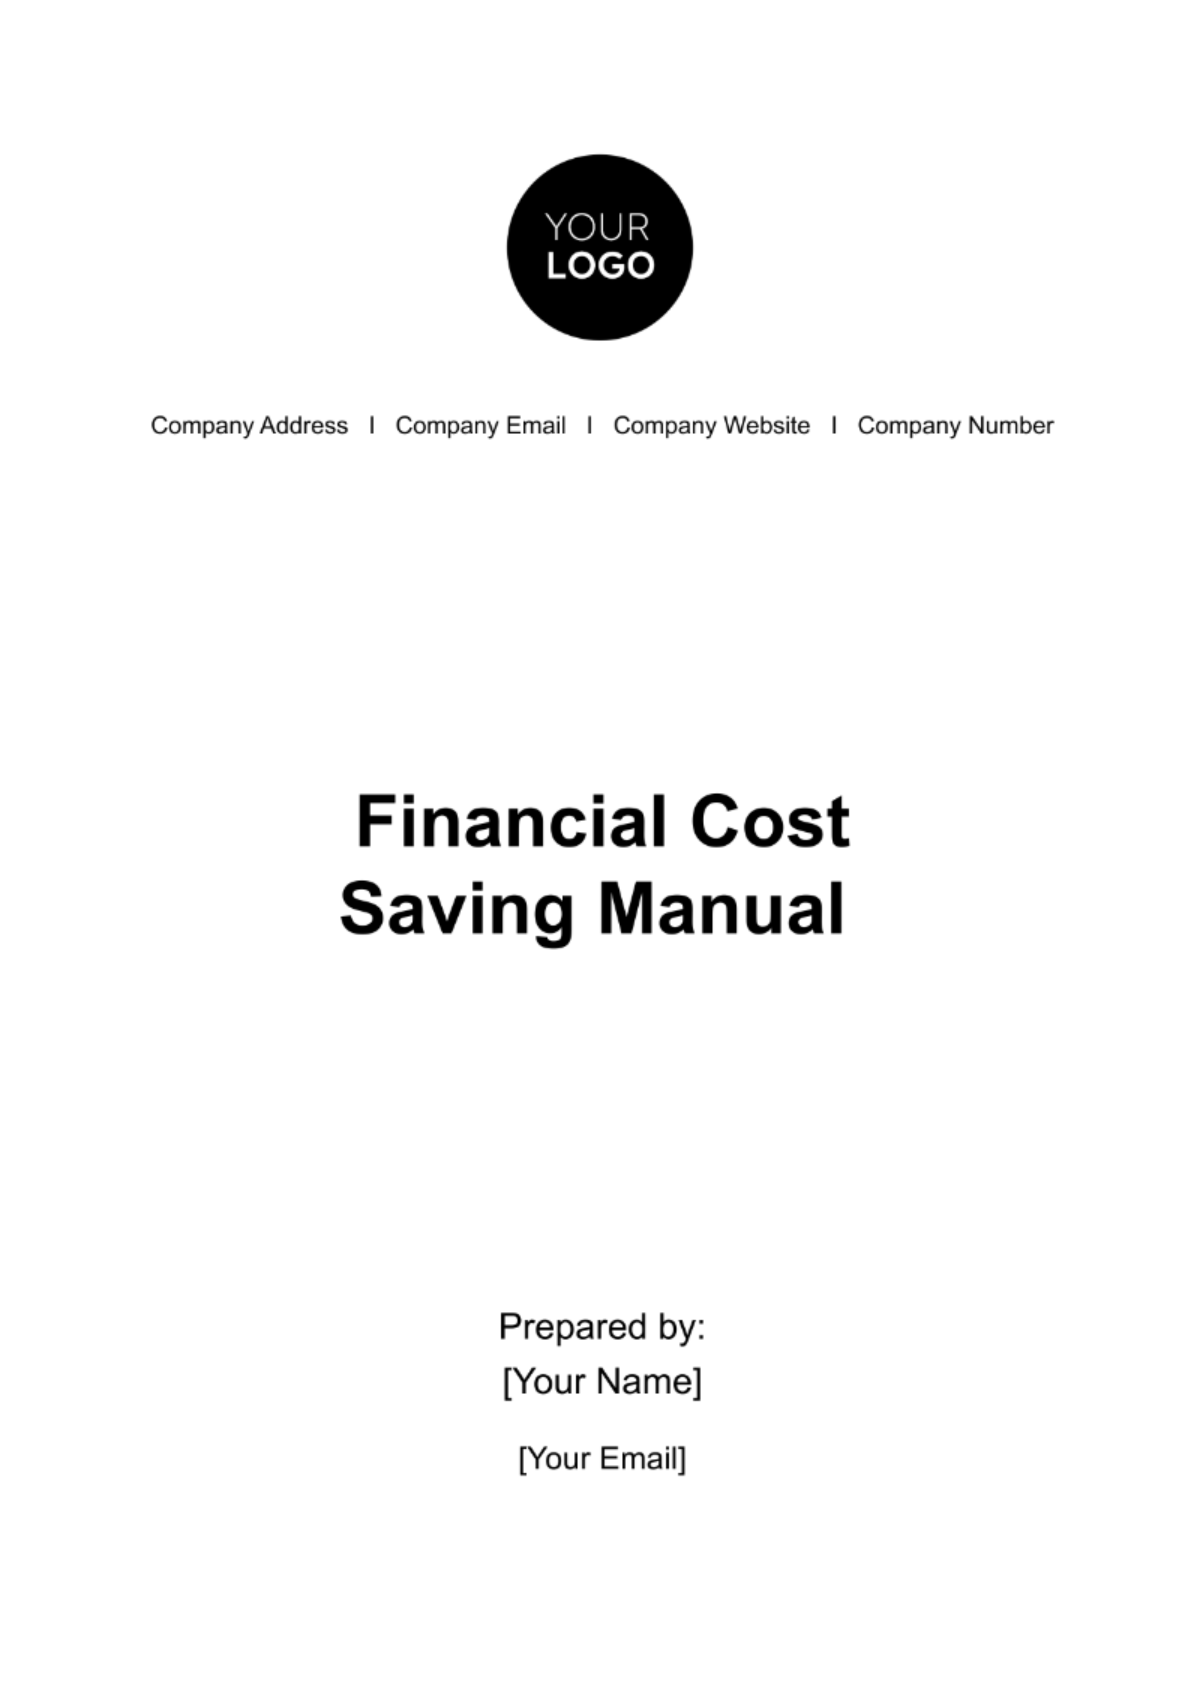 Financial Cost Saving Manual Template